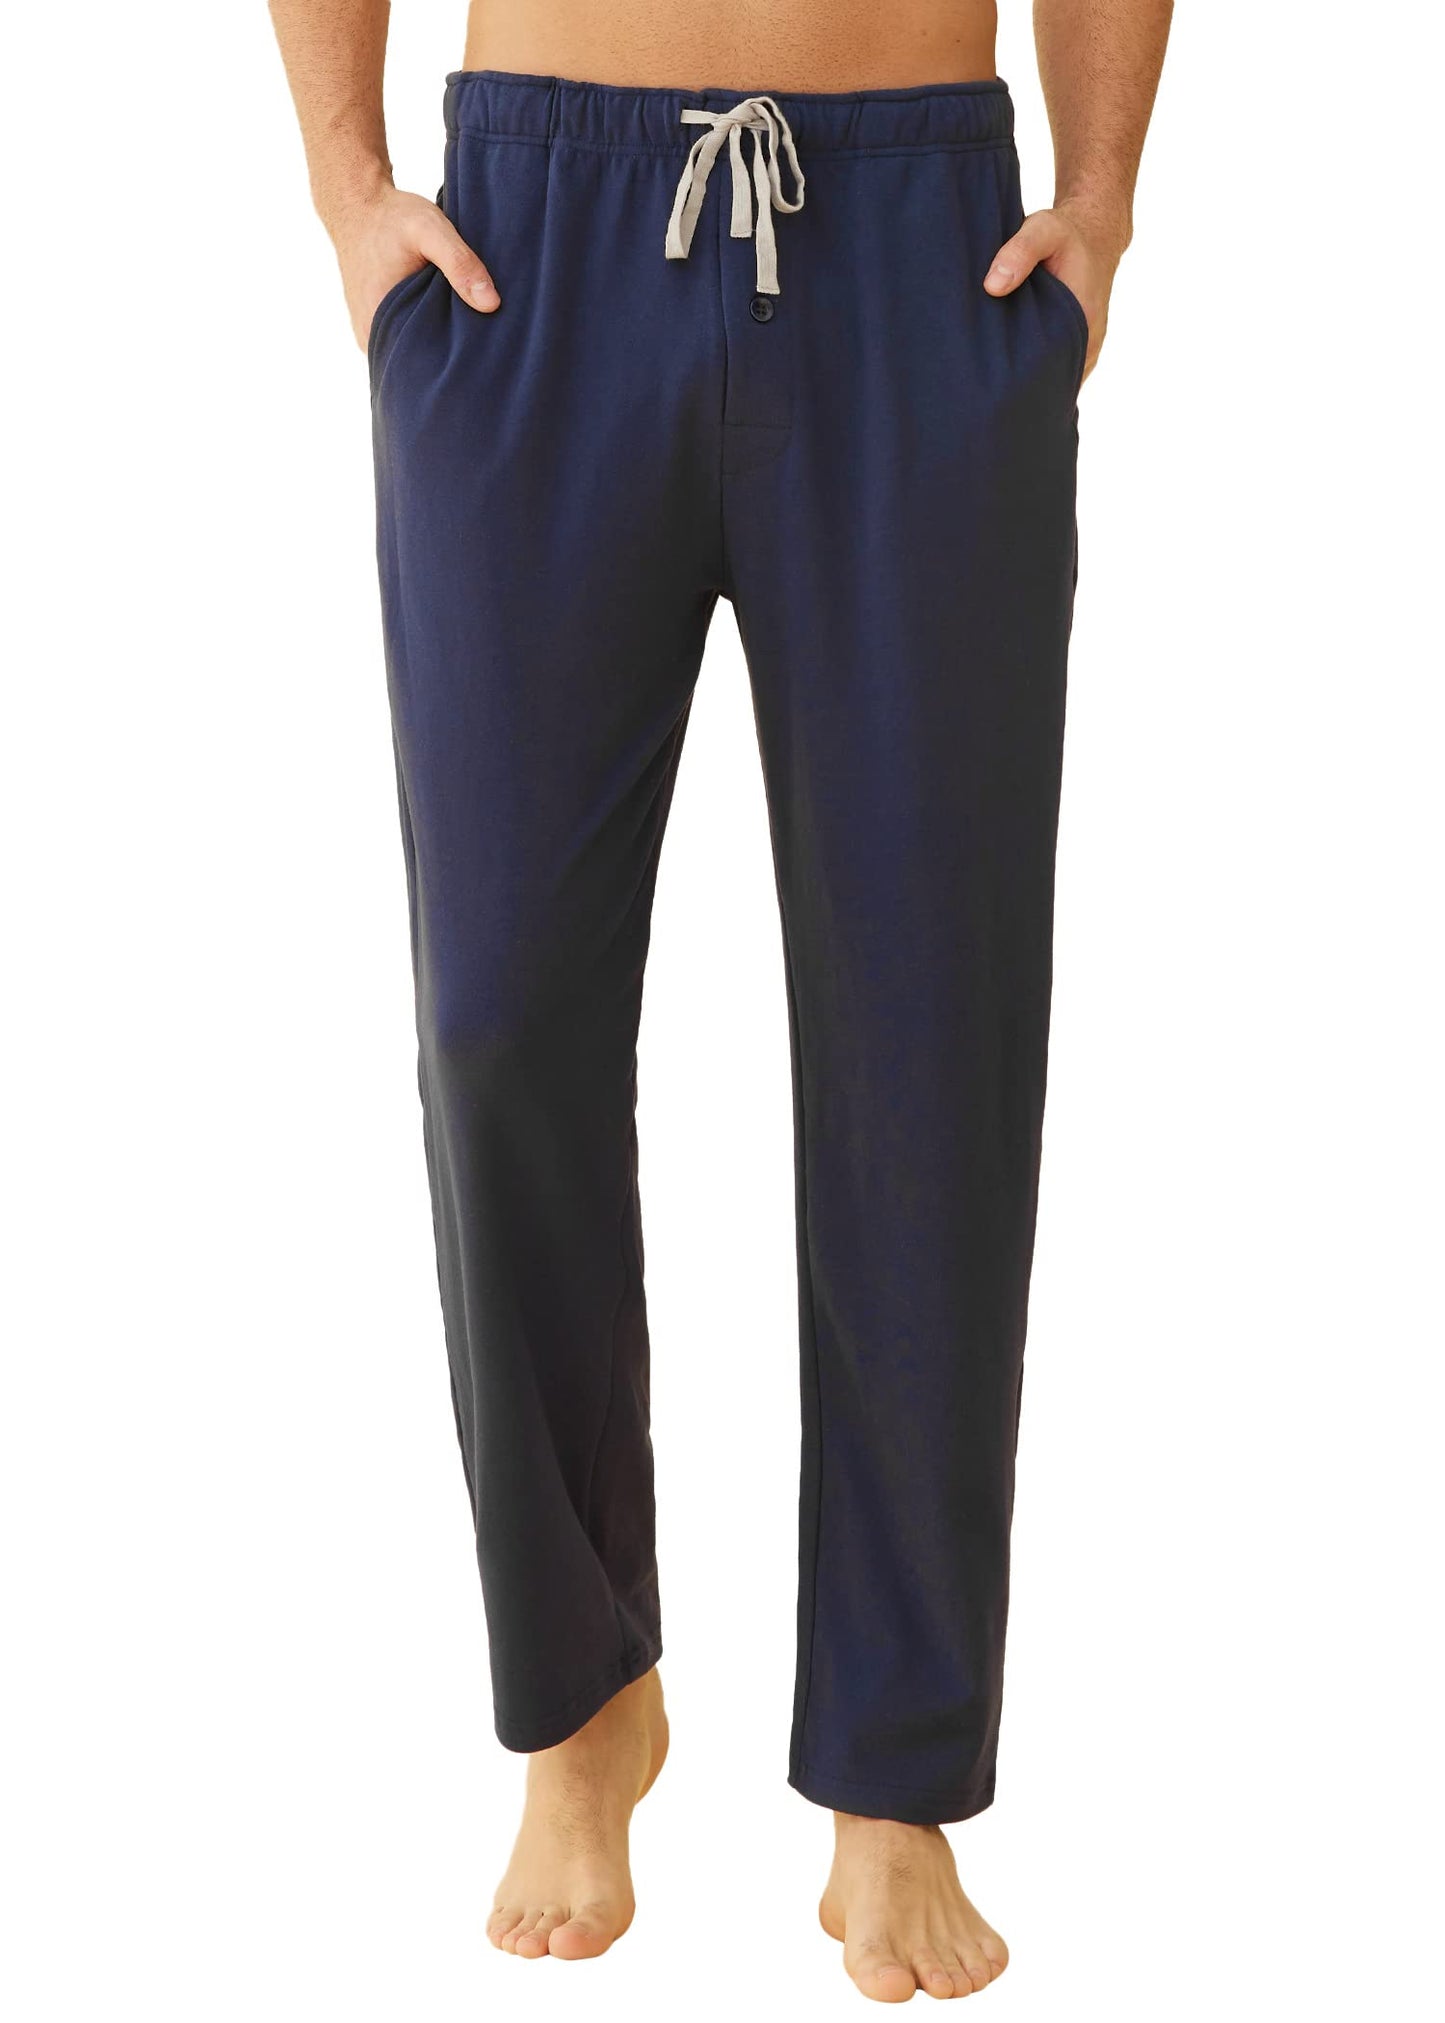 Women Pajama Pants Warm Fleece Lounge Pants Sleepwear Bottoms Trousers with  Pockets 